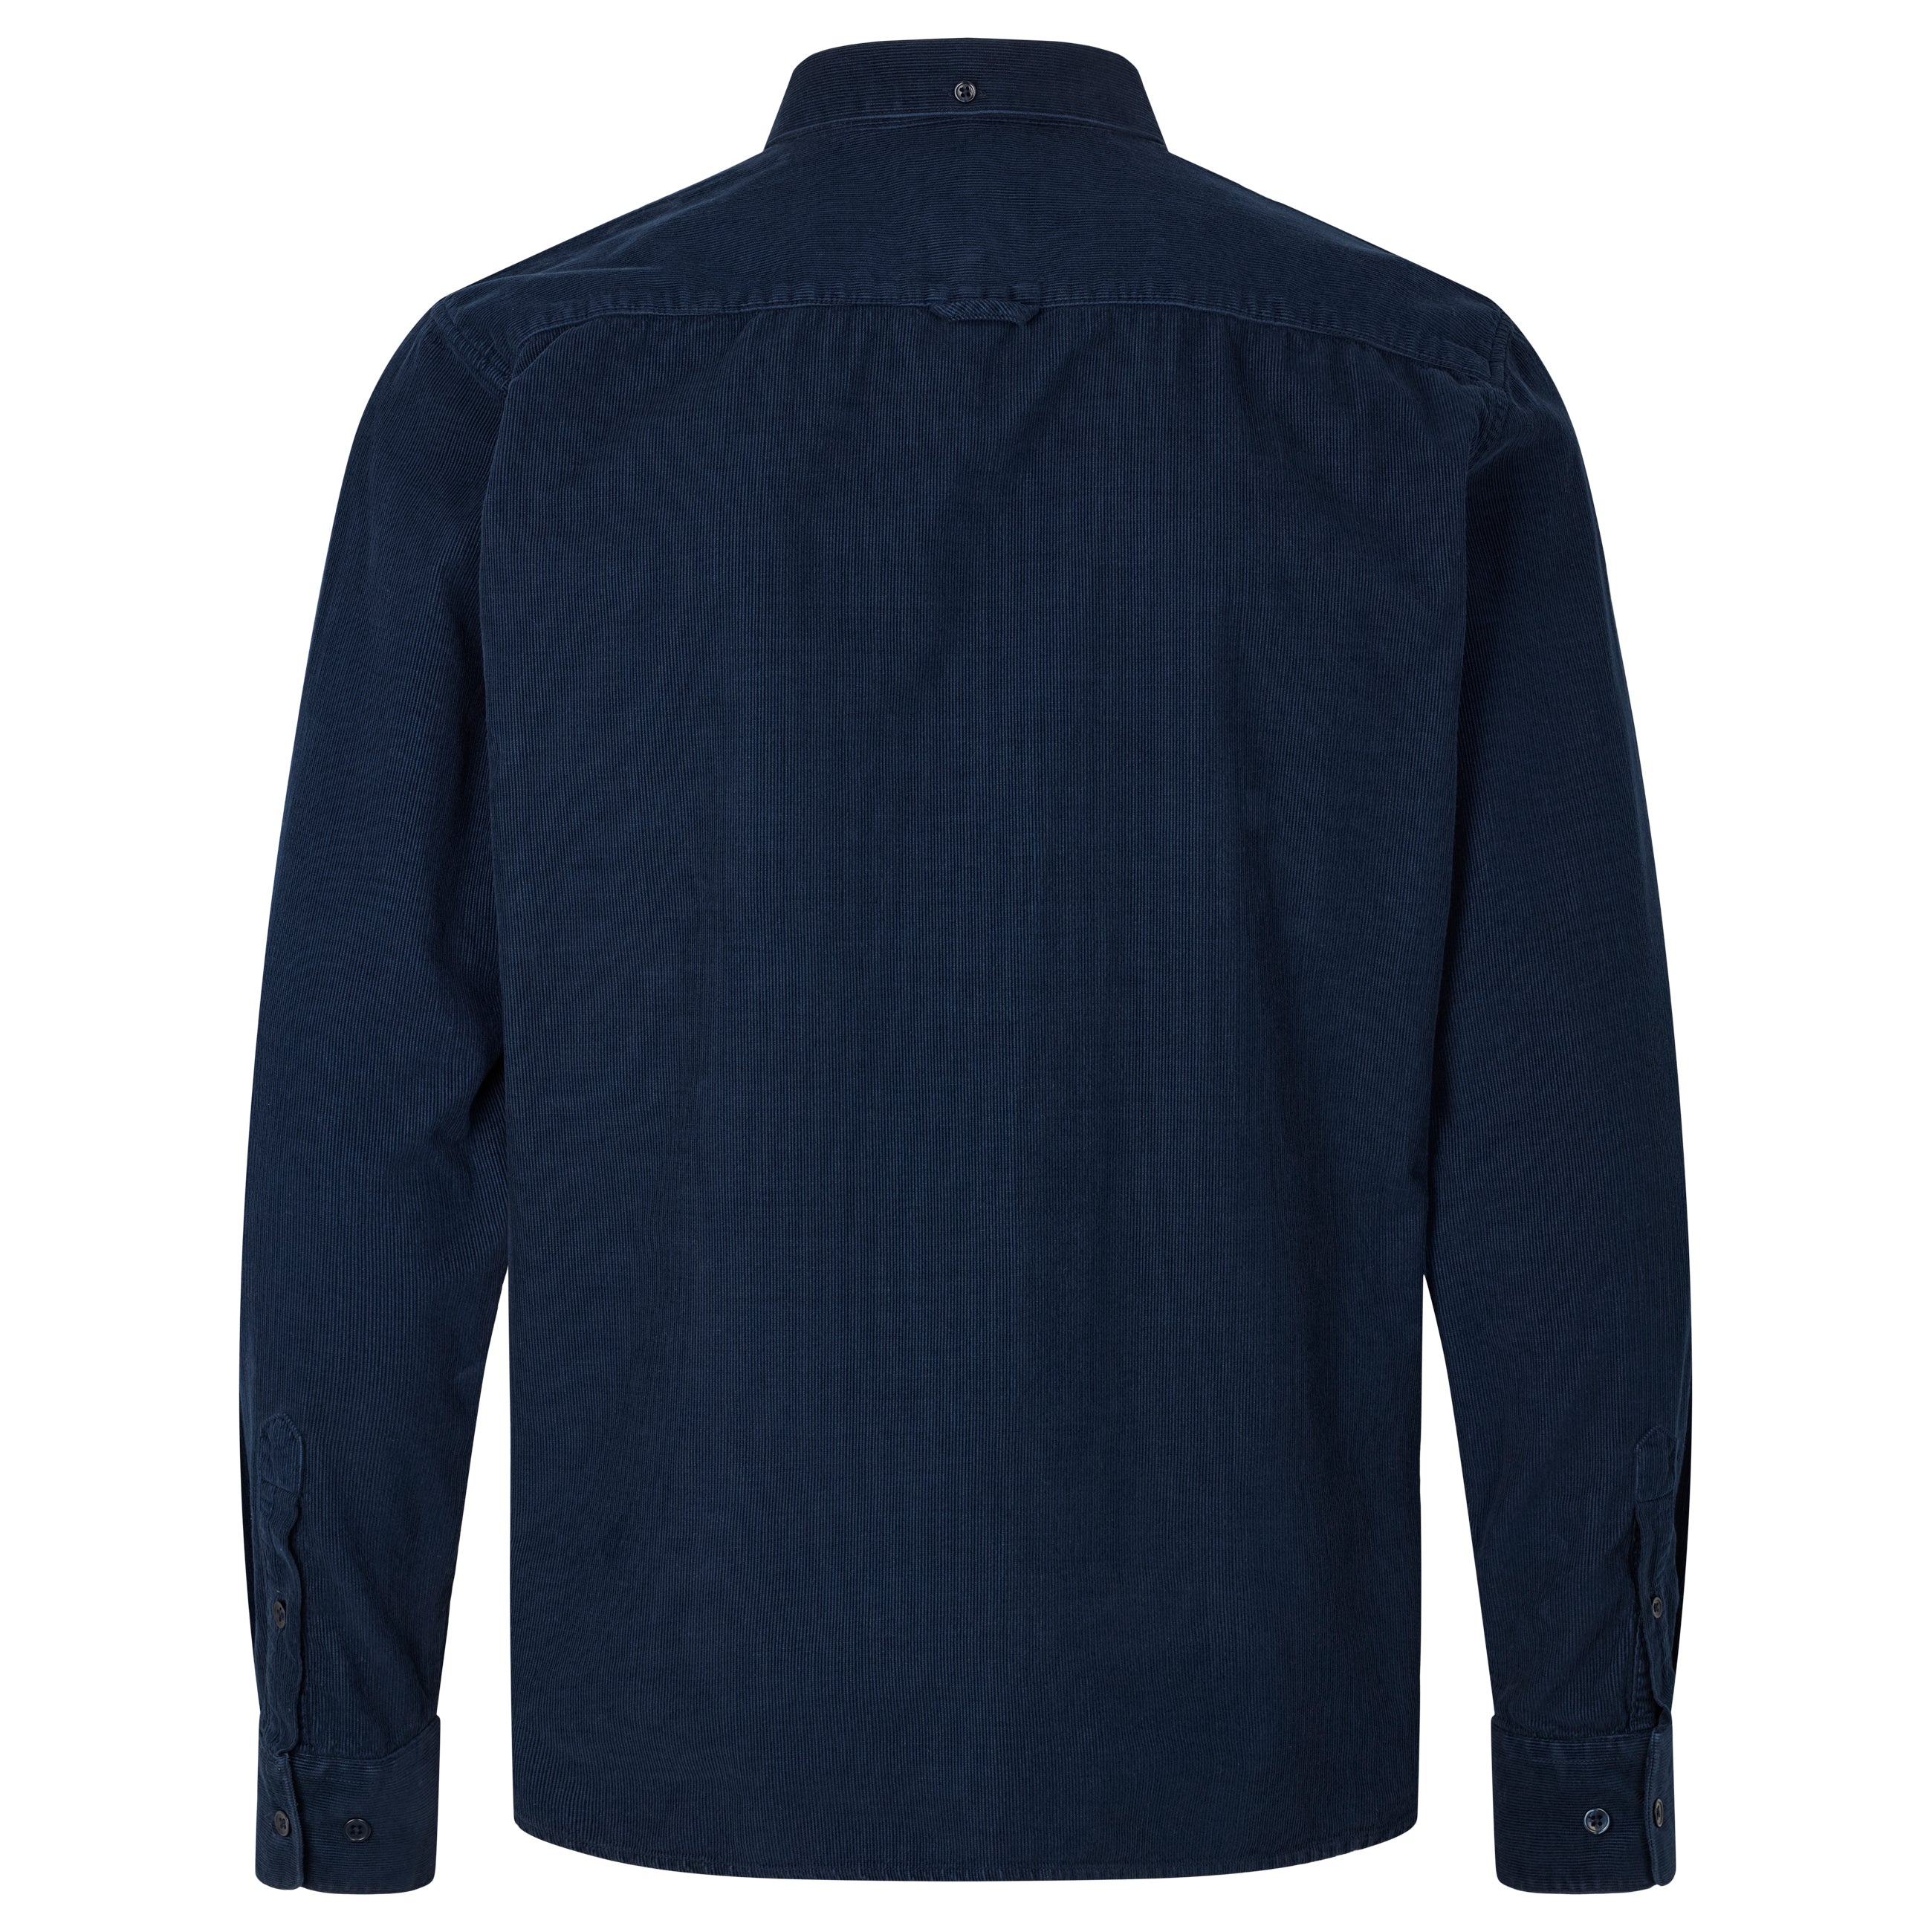 By Garment Makers Vincent Corduroy Shirt GOTS Shirt LS 3096 Navy Blazer